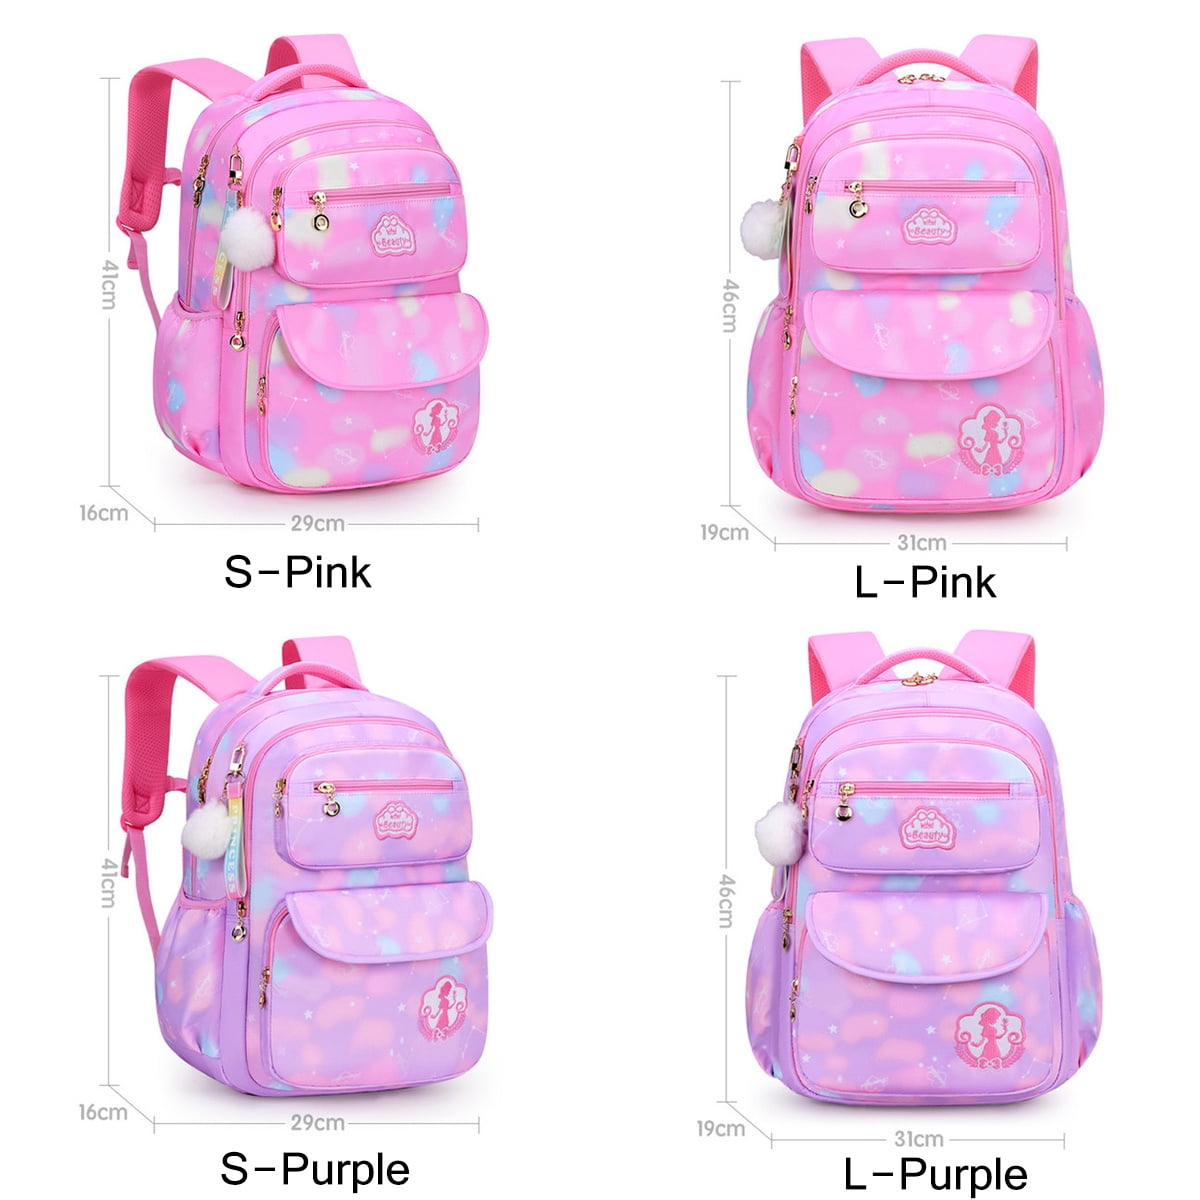 Laidan Cute Bunny Backpack School Bags Cartoon Travel Rucksack Book Bag for Girls Teenage Student KindergartenLarge-Pink, Kids Unisex